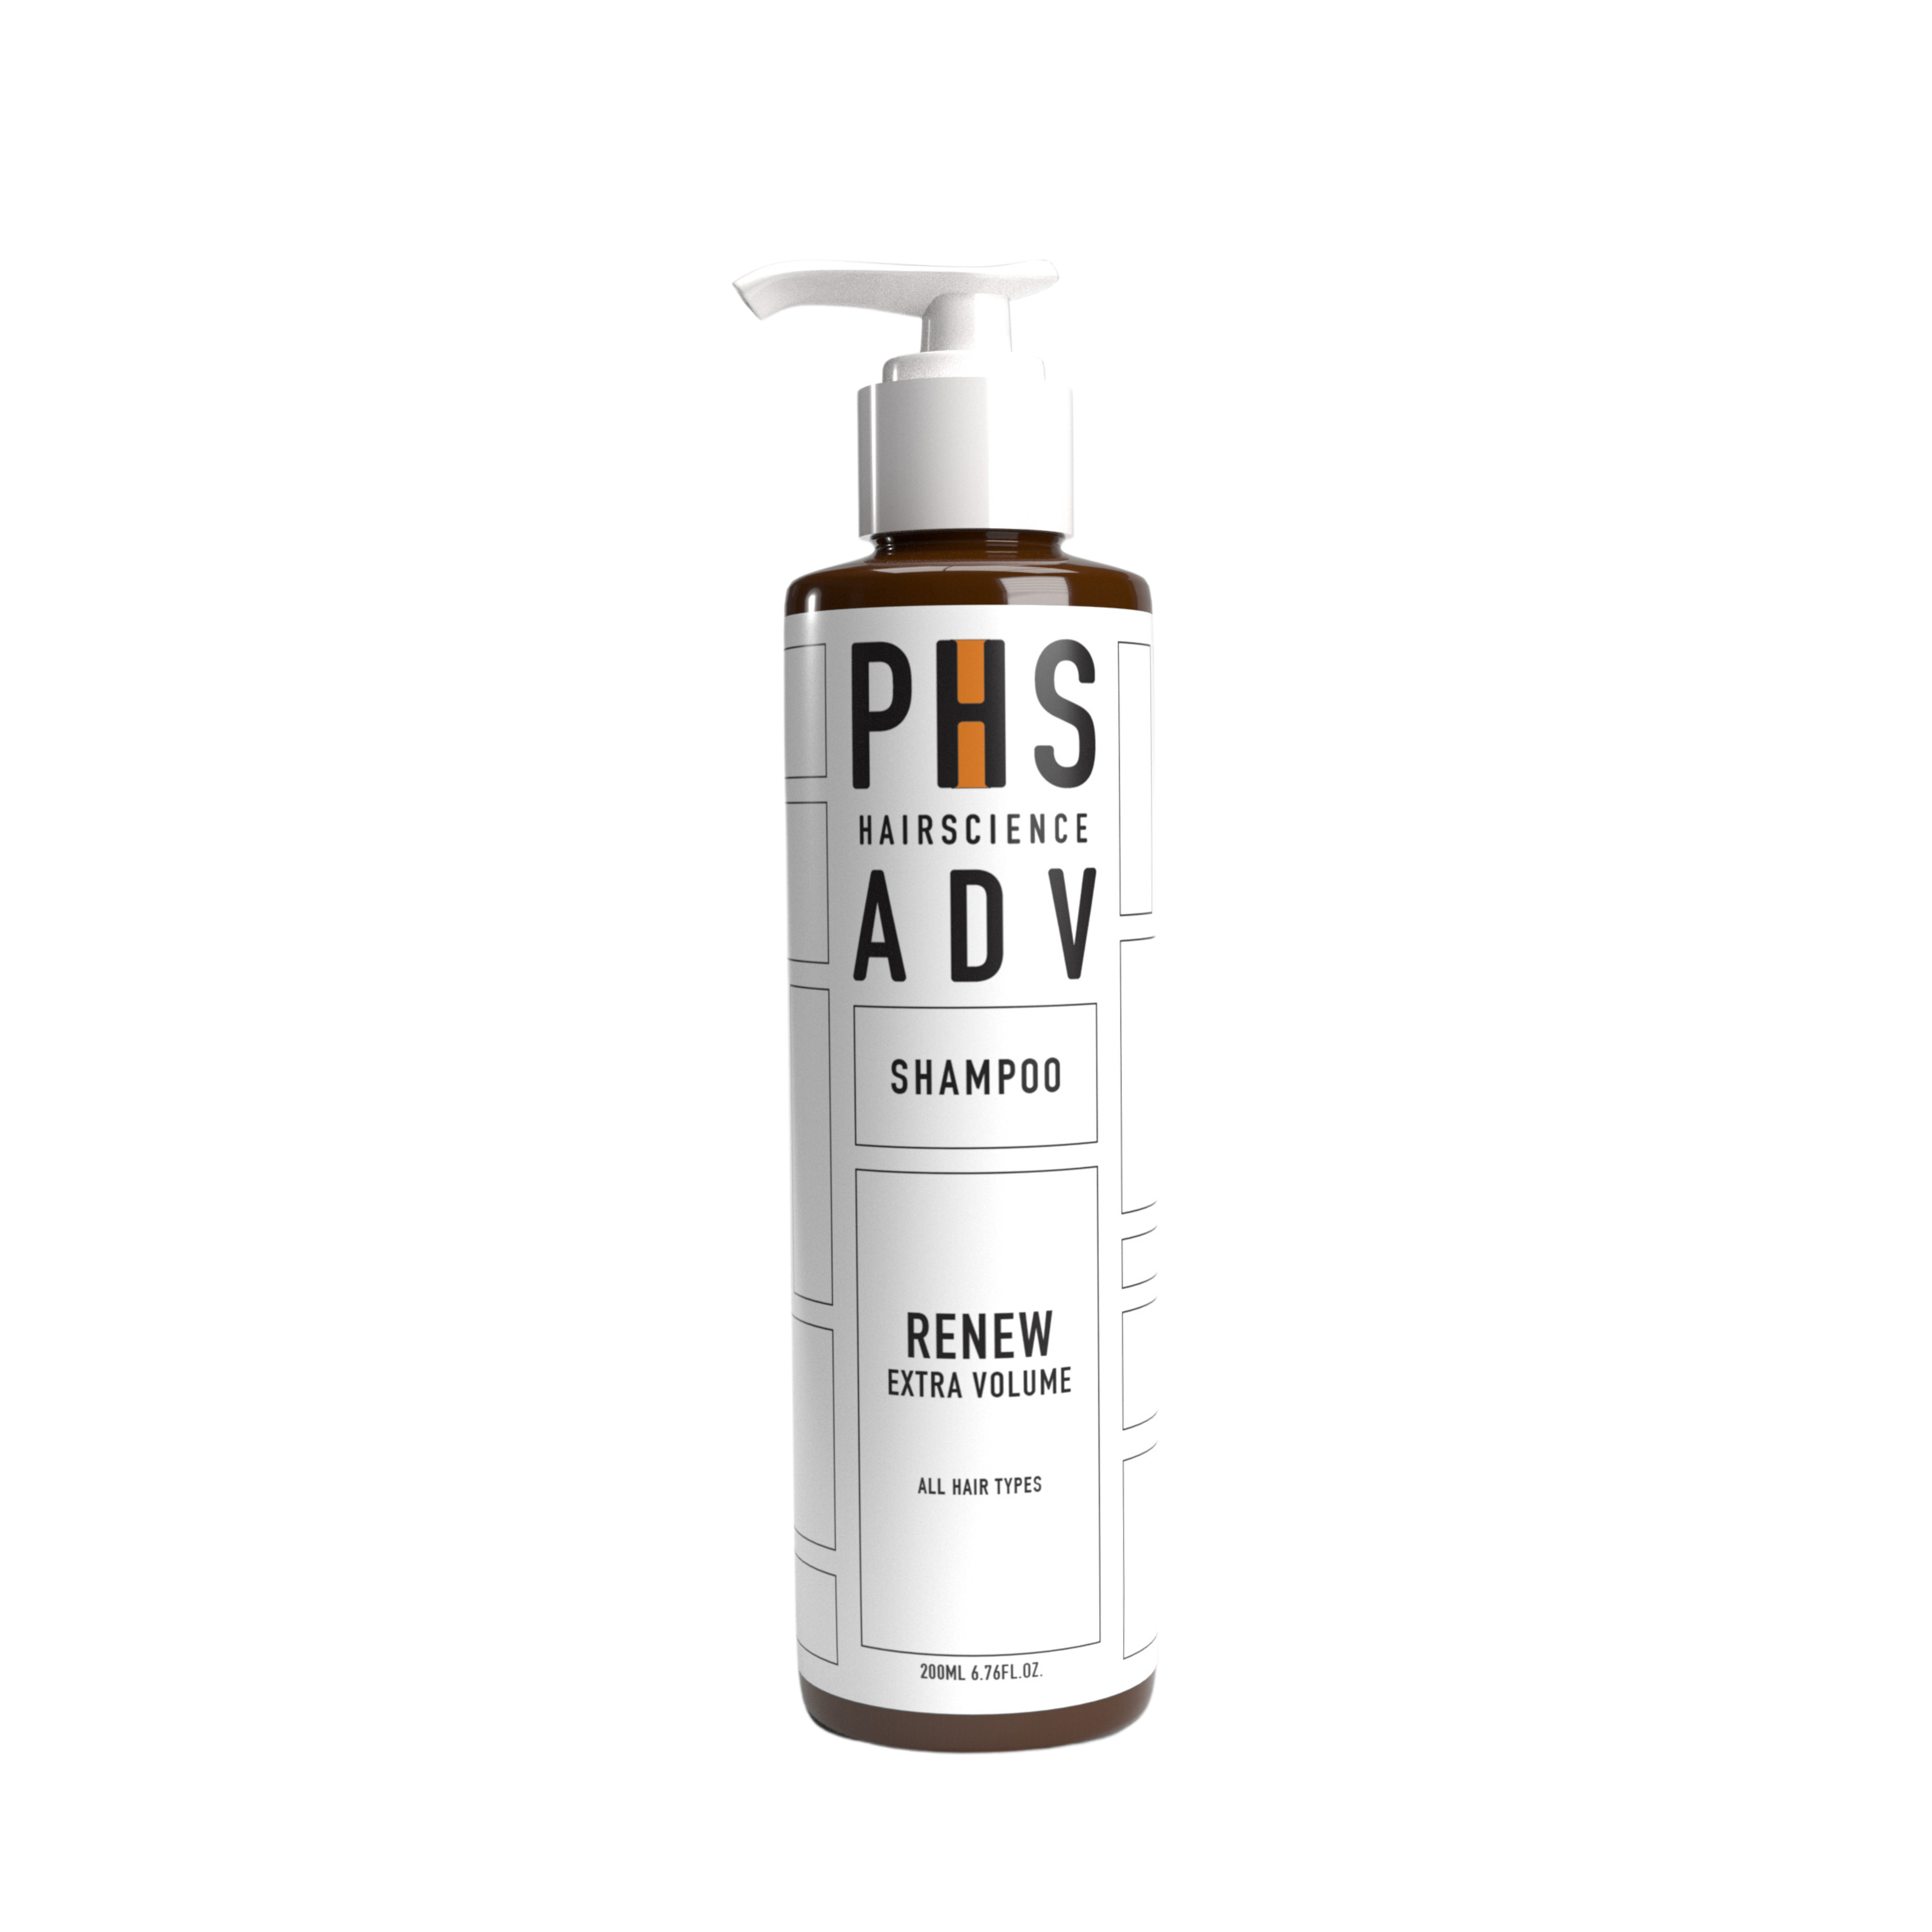 PHS Hairscience ADV Renew Shampoo 200ml